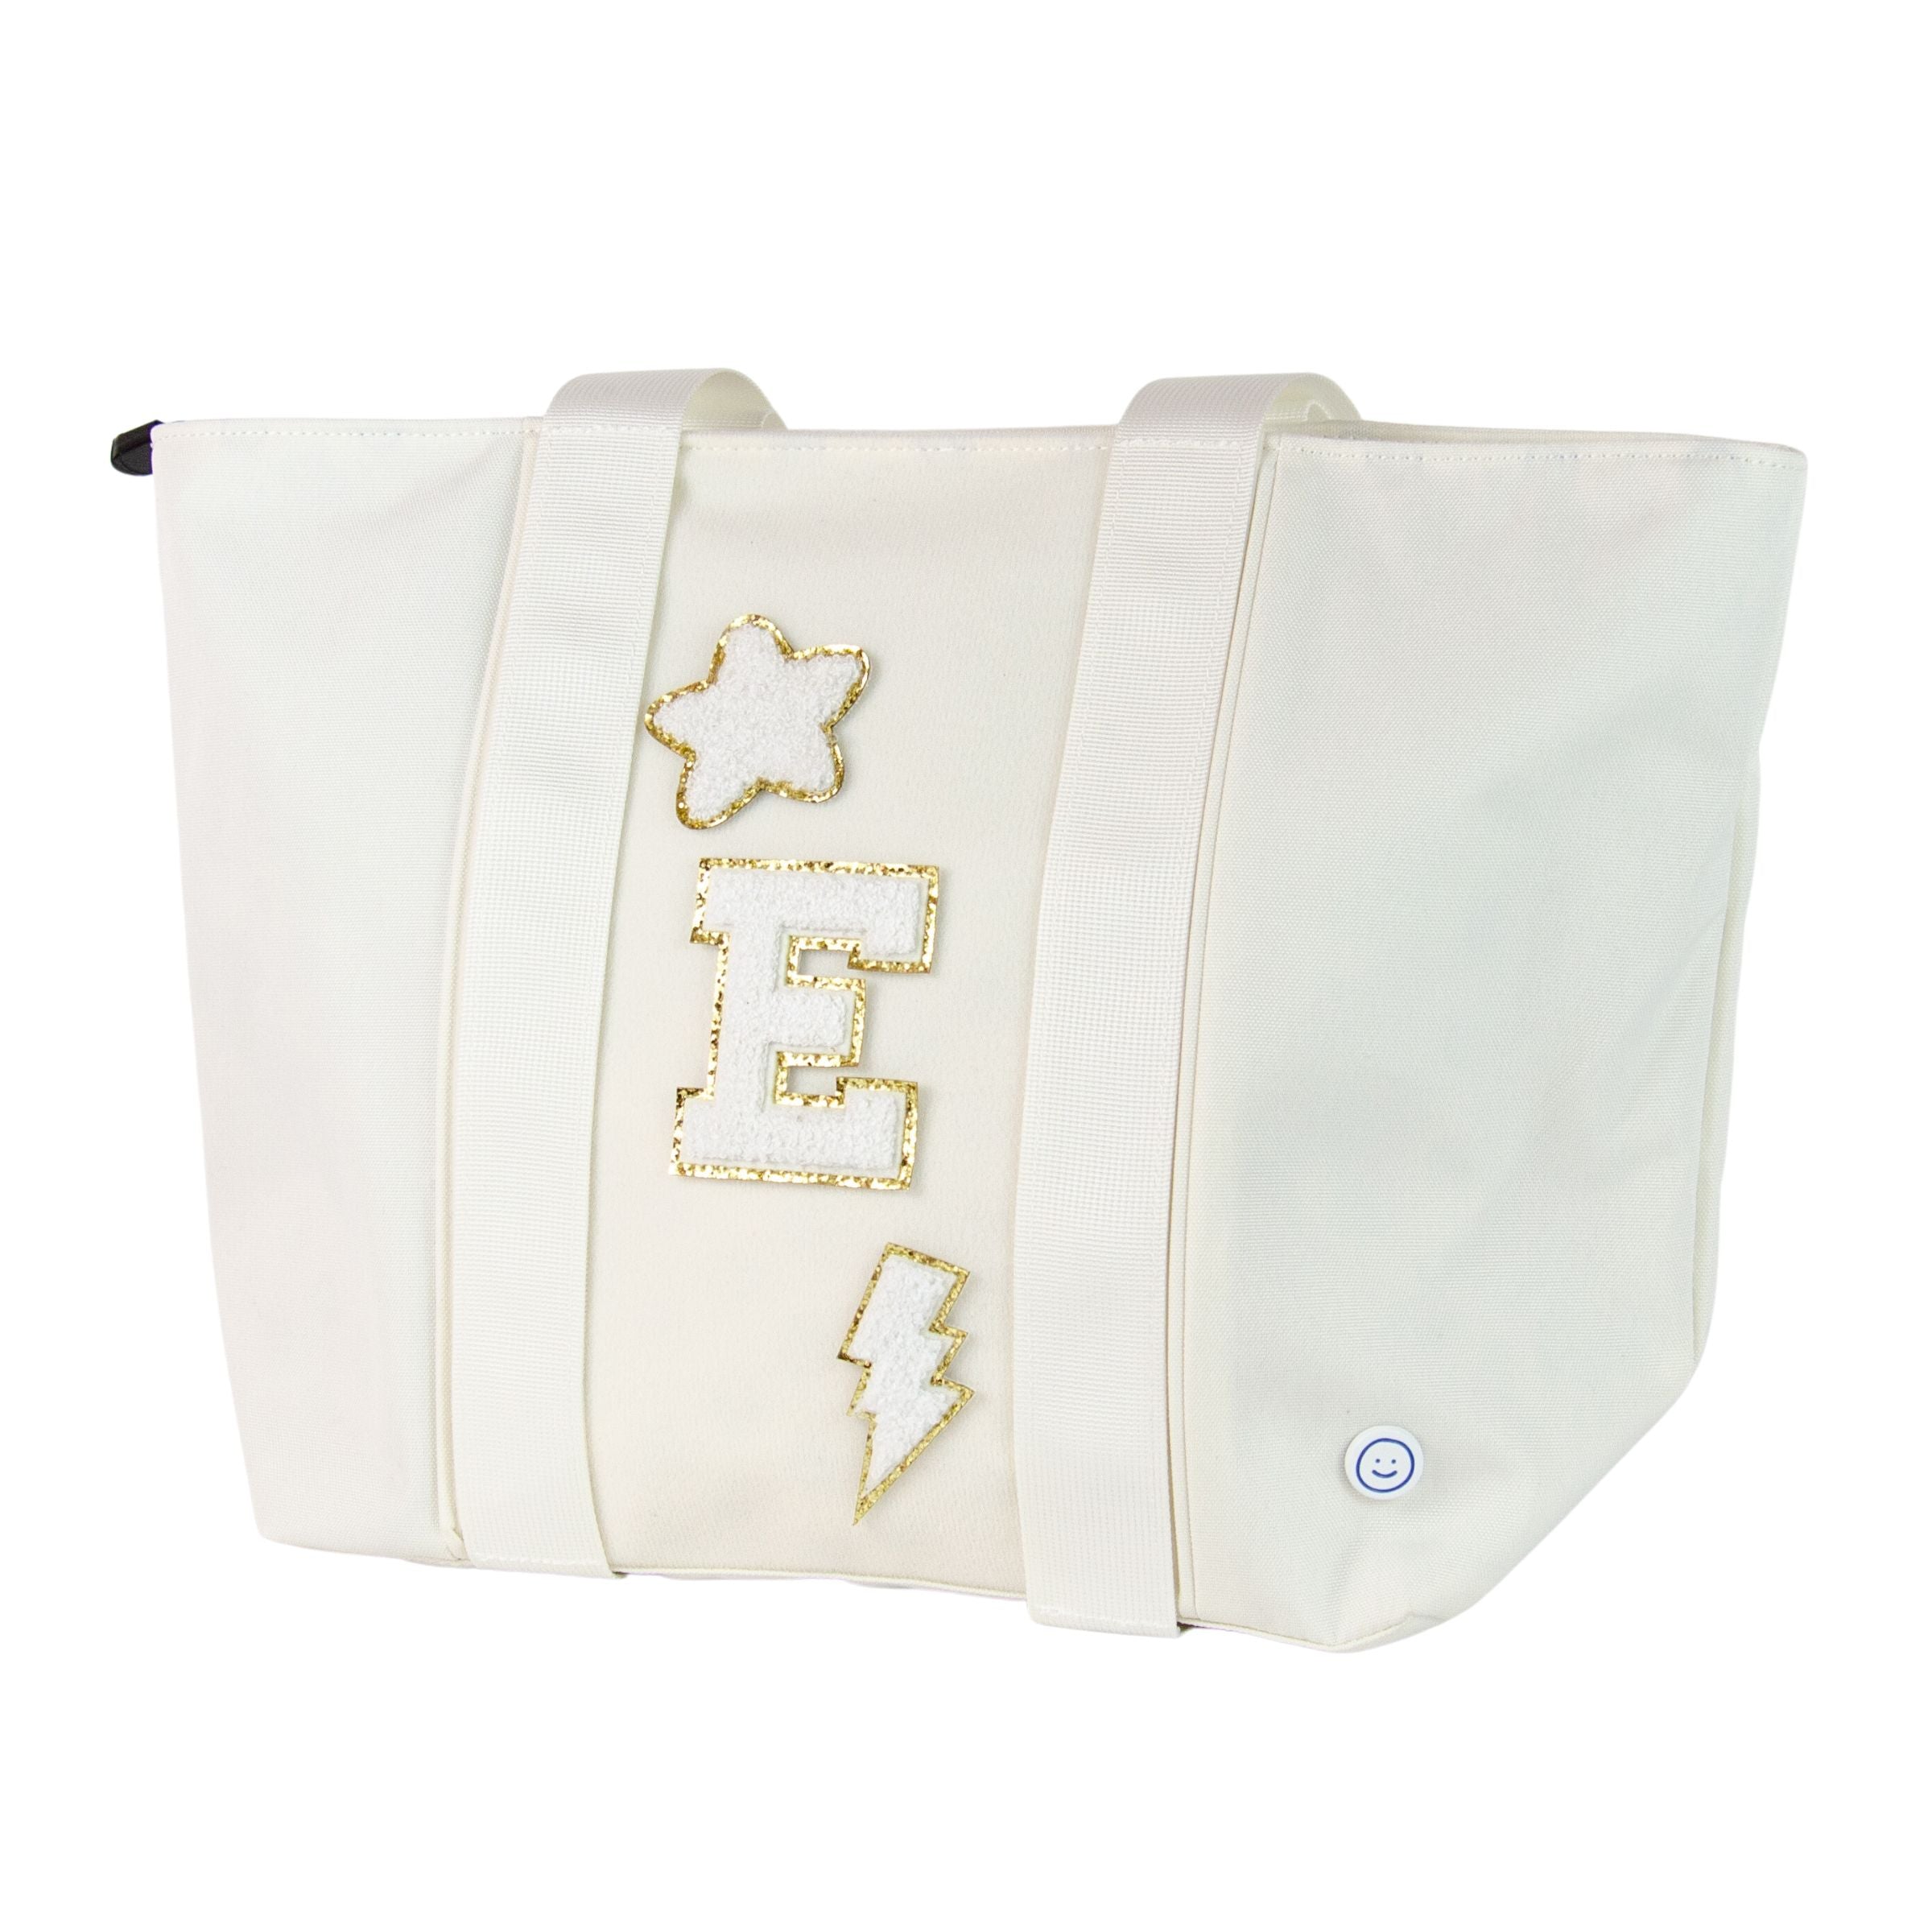 Christian Dior sling bag 4800/= - Ideal Cosmetics Kenya